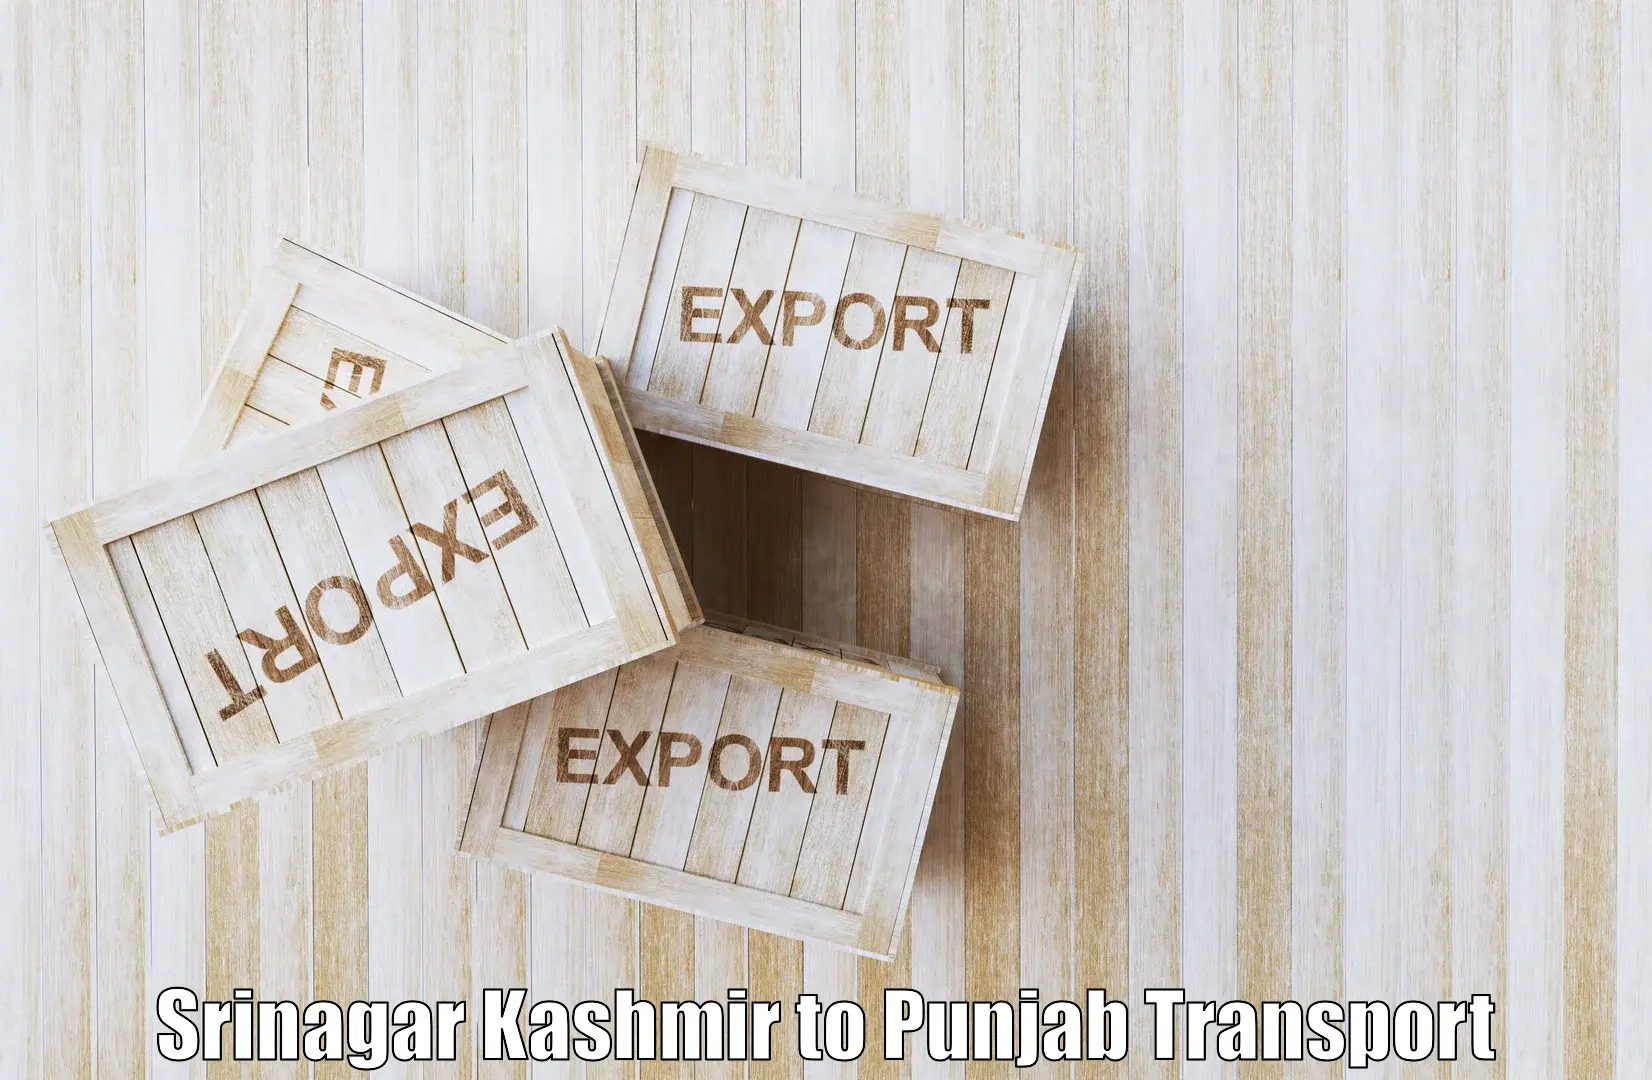 Online transport service Srinagar Kashmir to Zirakpur